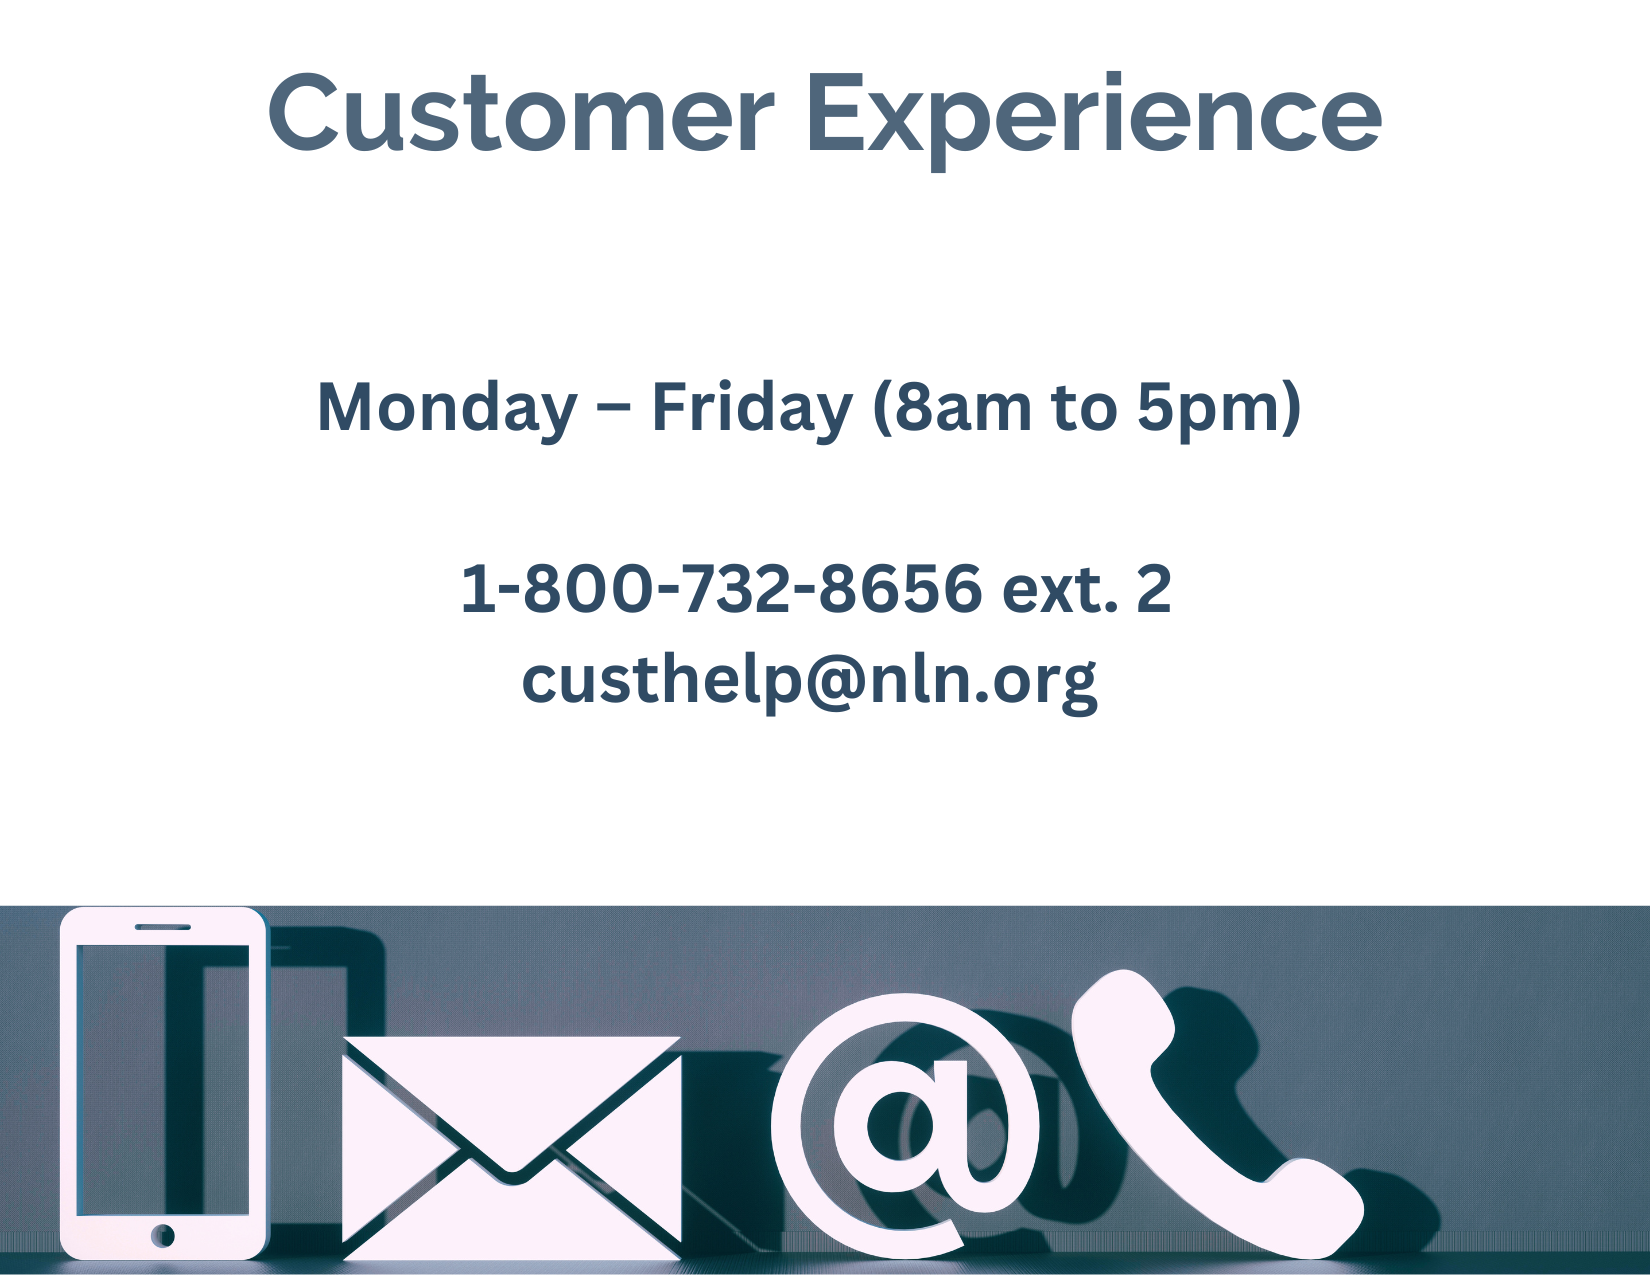 Customer Experience Image